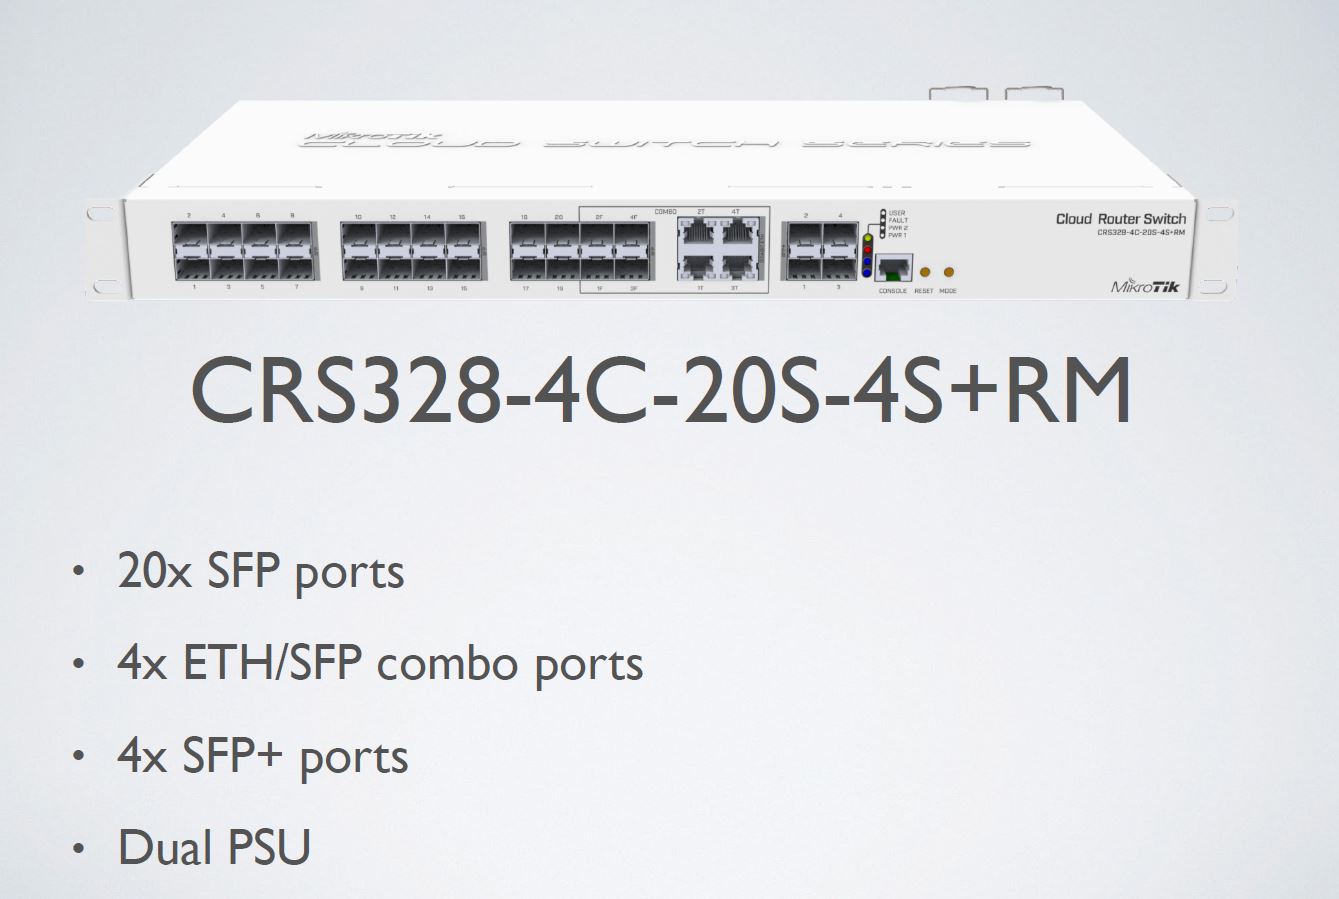 MikroTik CRS328 4C 20S 4S+RM Switch